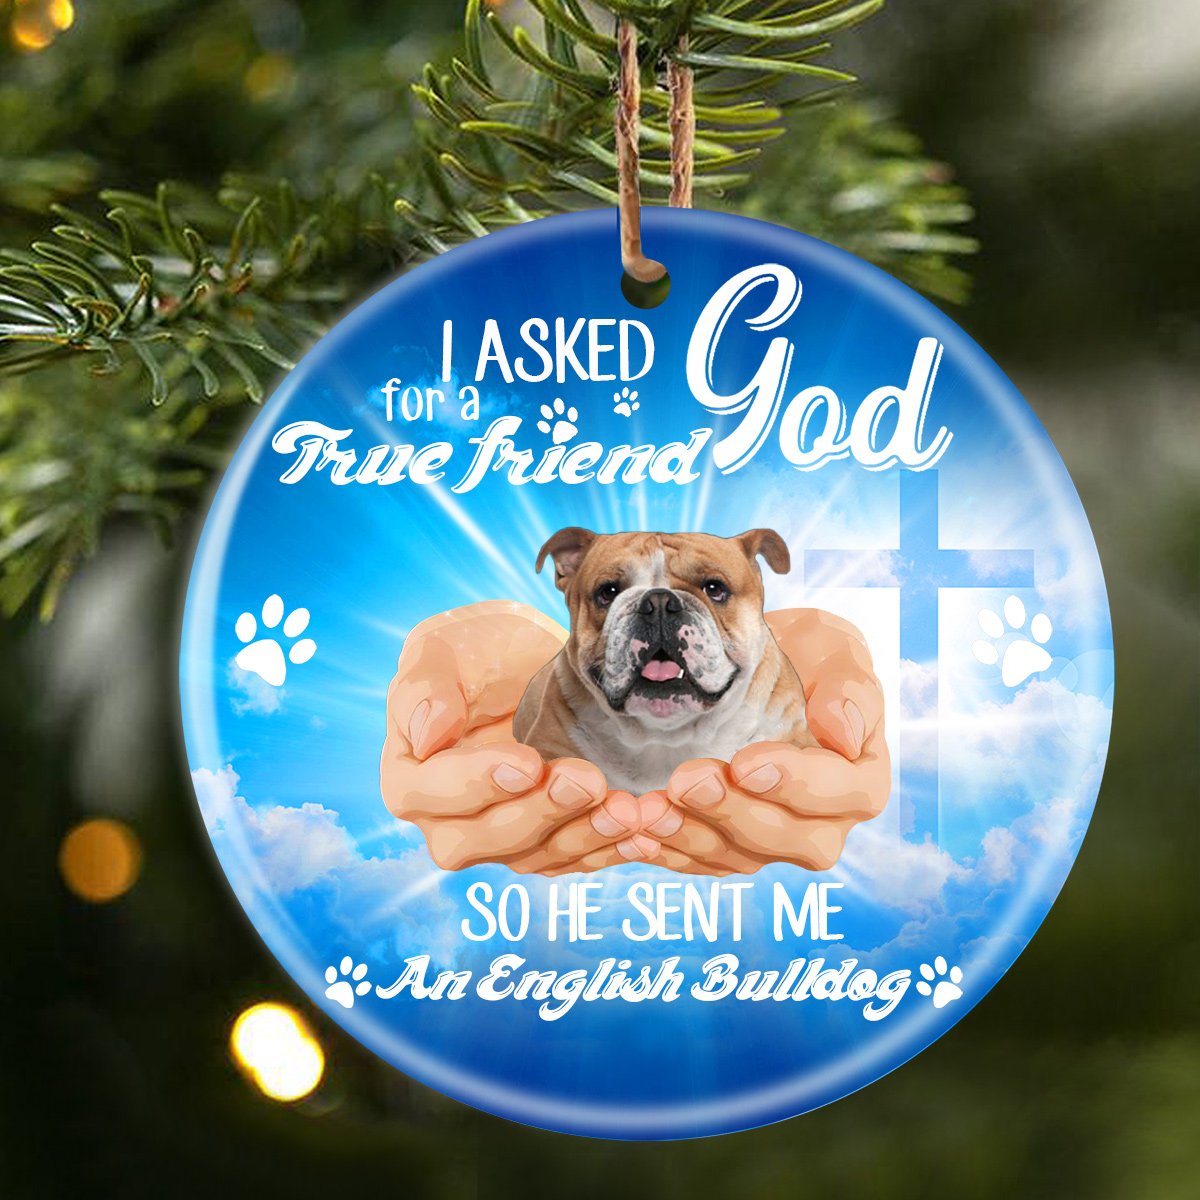 God Send Me A/An English Bulldog Porcelain/Ceramic Ornament